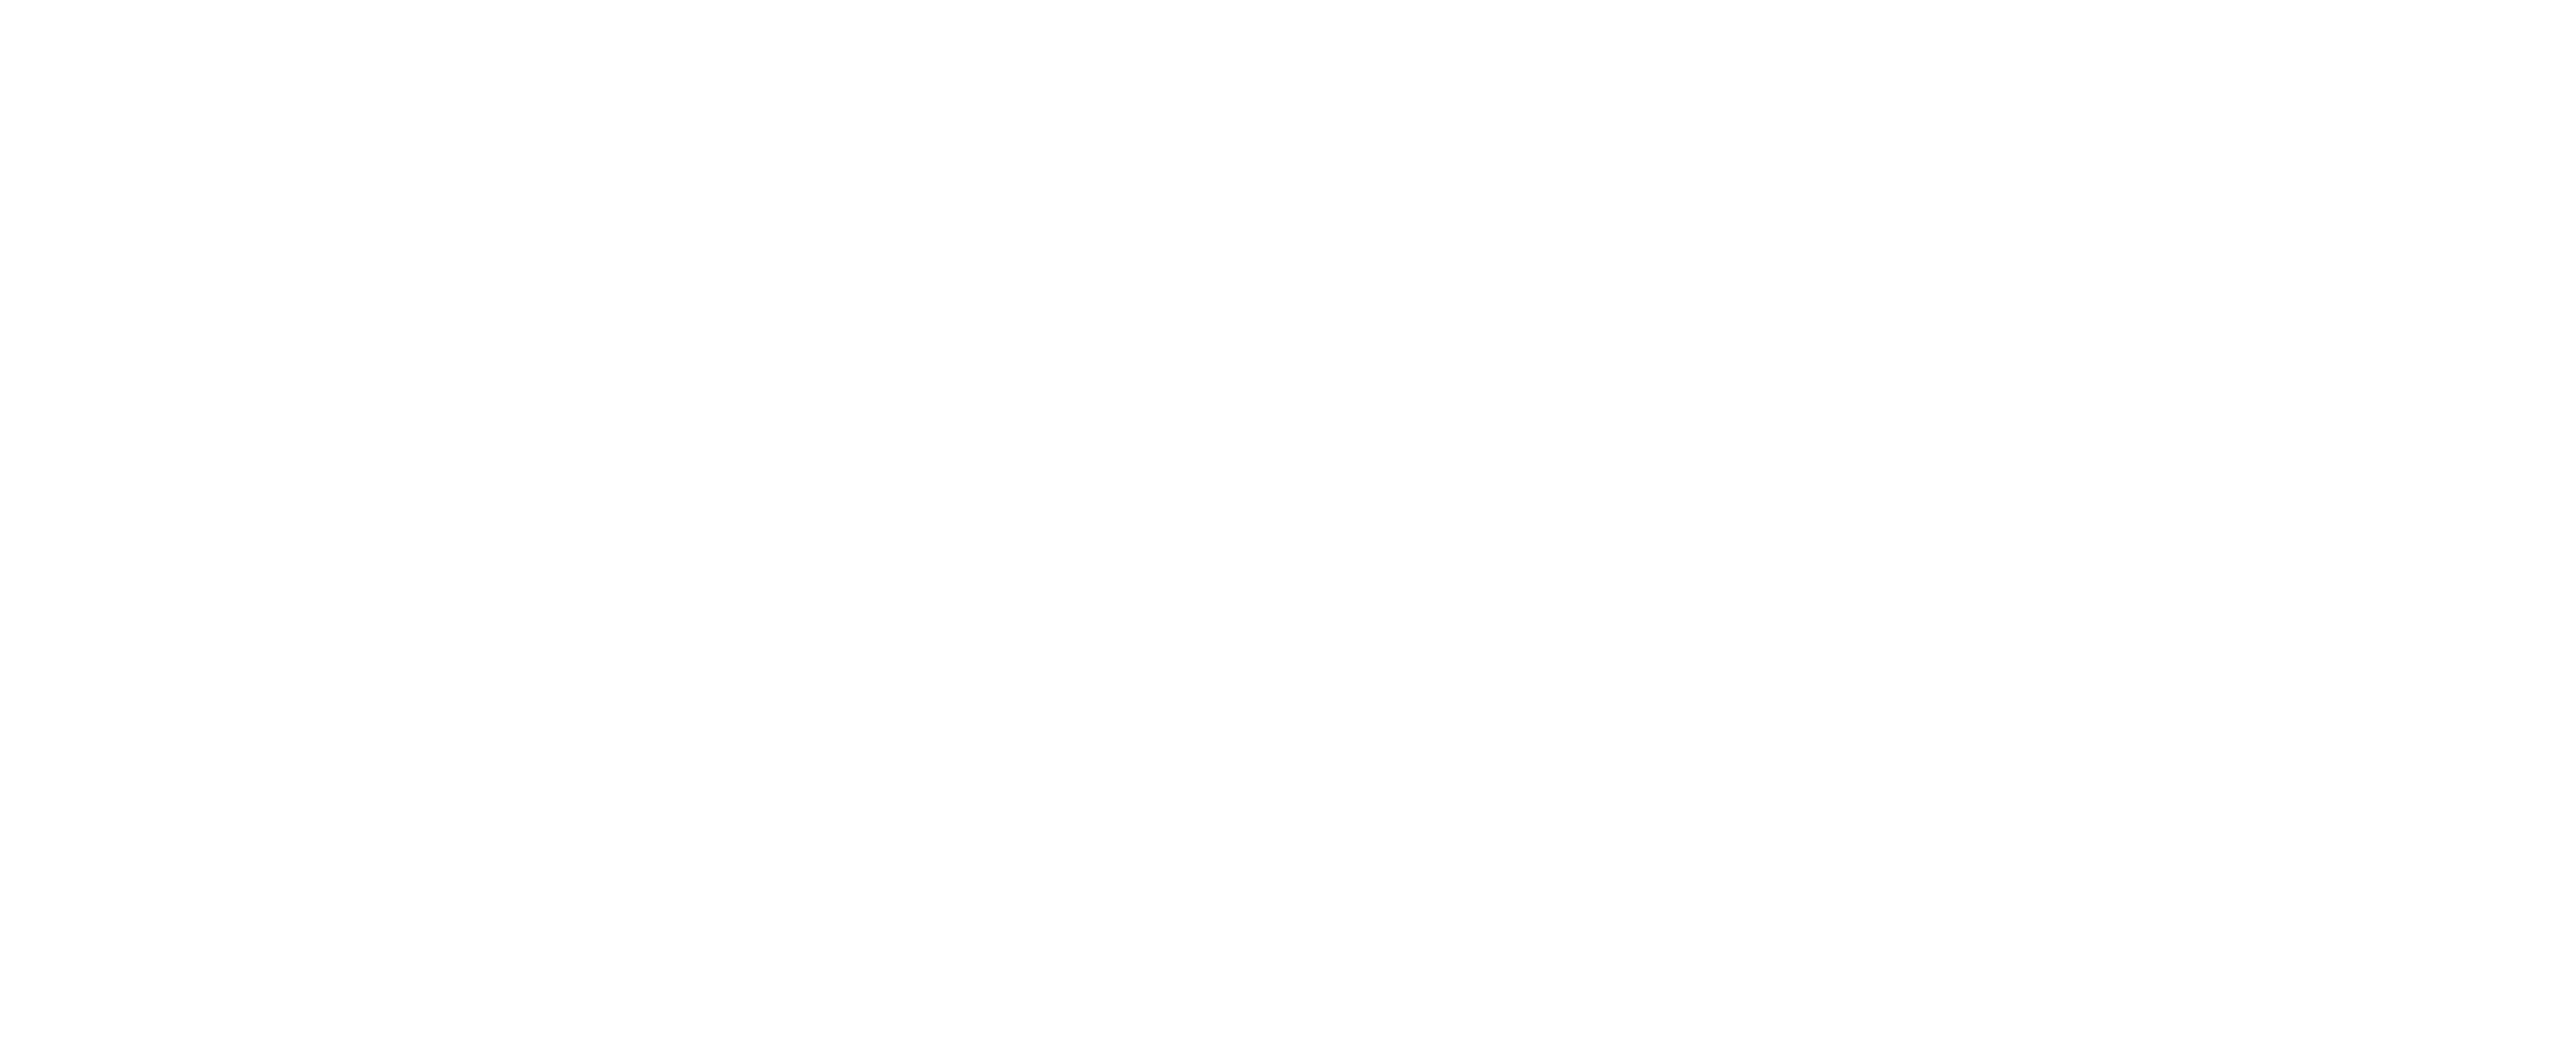 Google ChromeOS